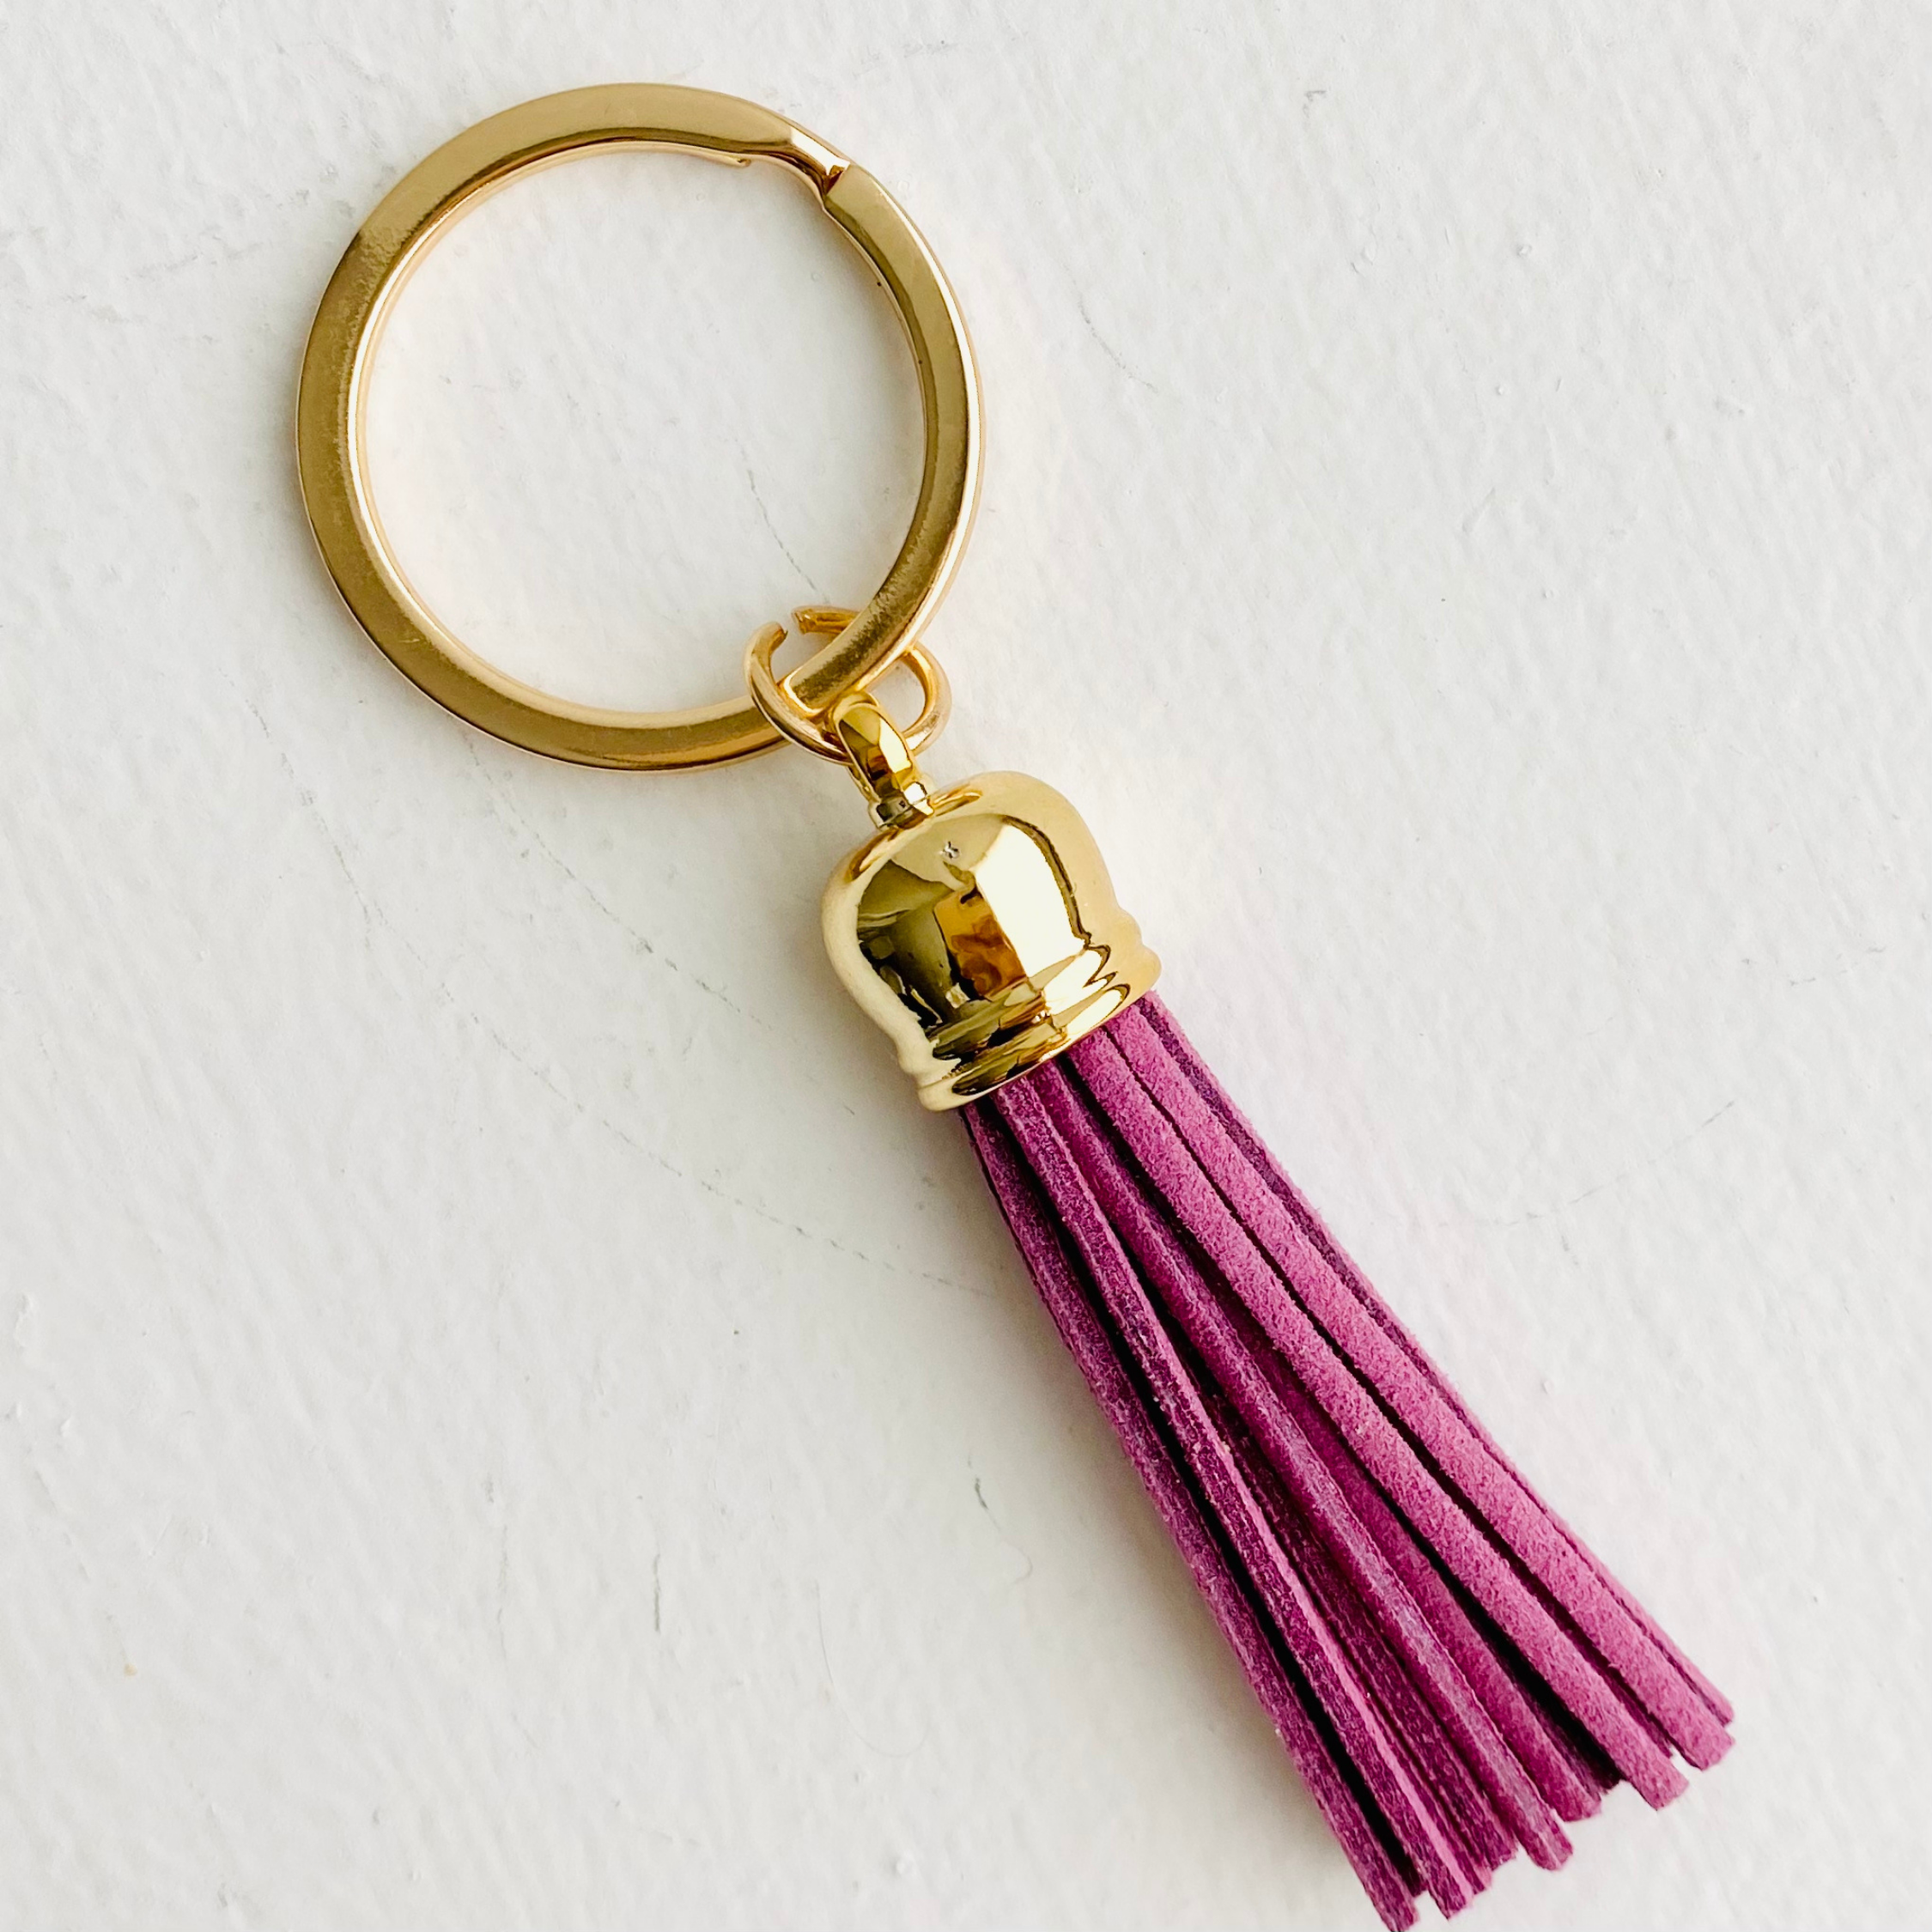 Naierhg Key Chain Tassels Compact Long Lasting Key Ring Bag